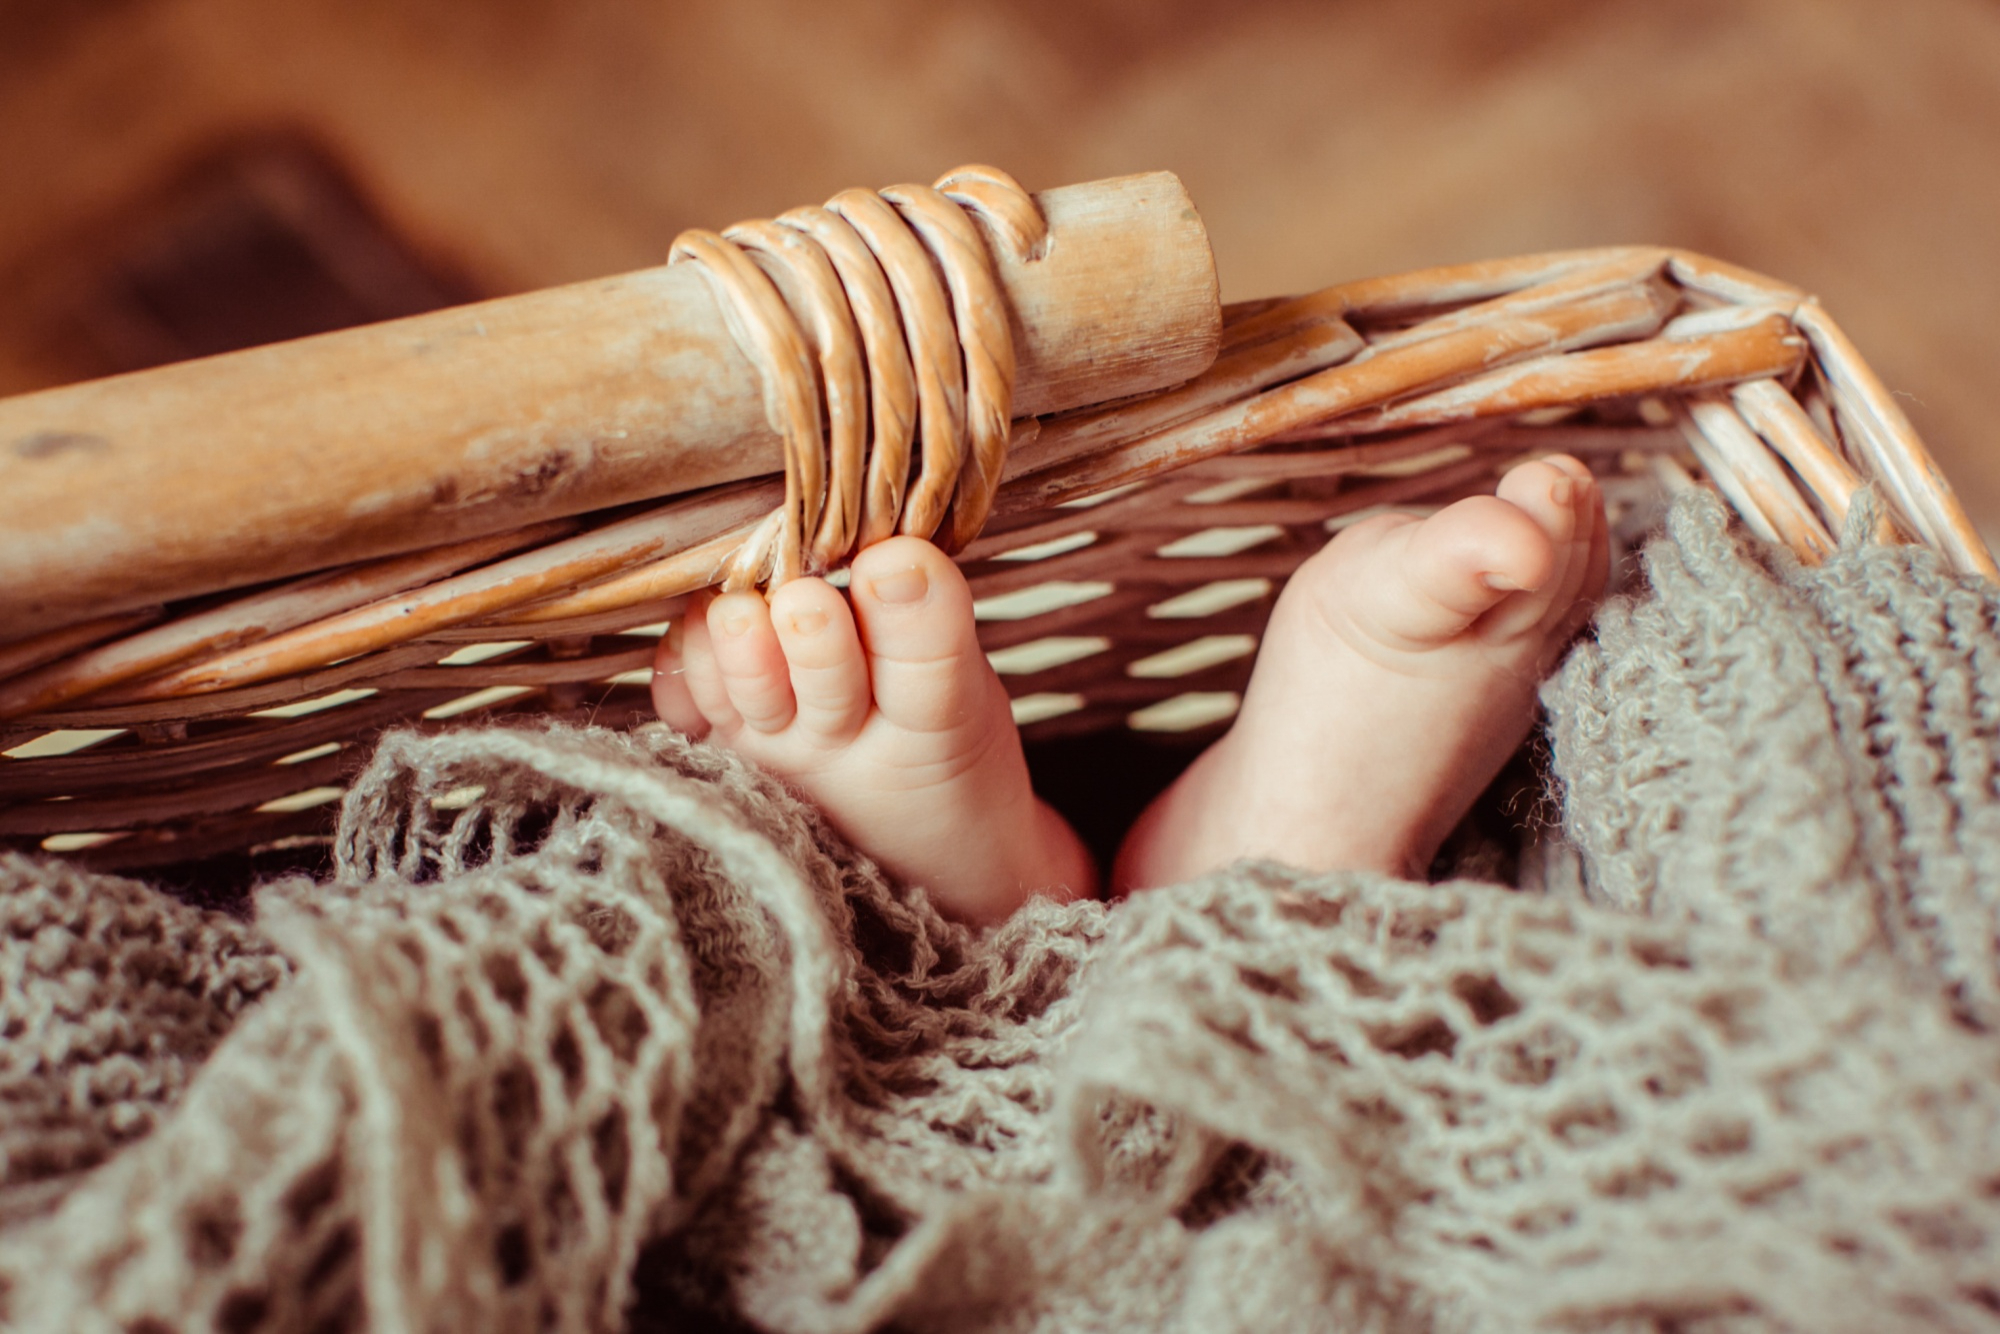 Feet of a baby lying in a basket | Source: Freepik